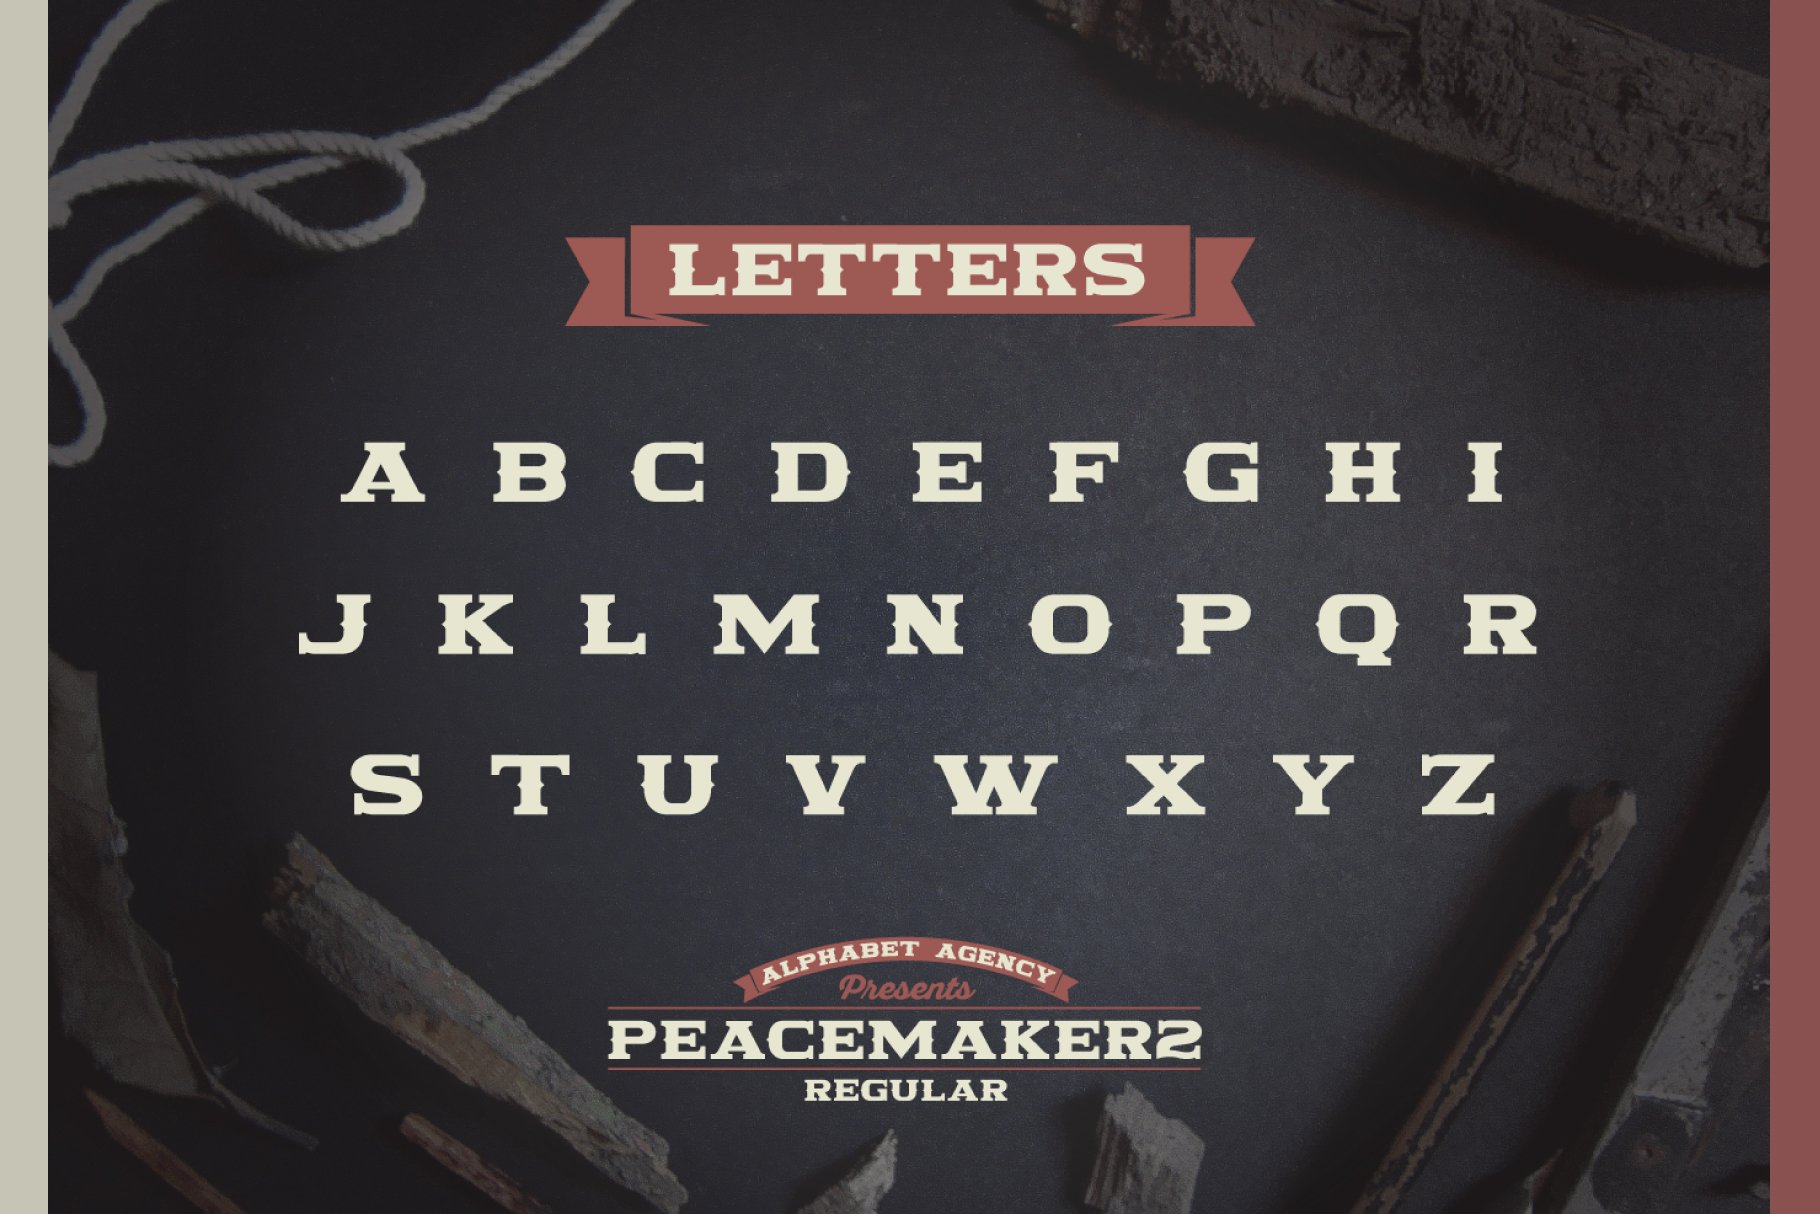 peacemaker2 regular letters 1820x1214 122